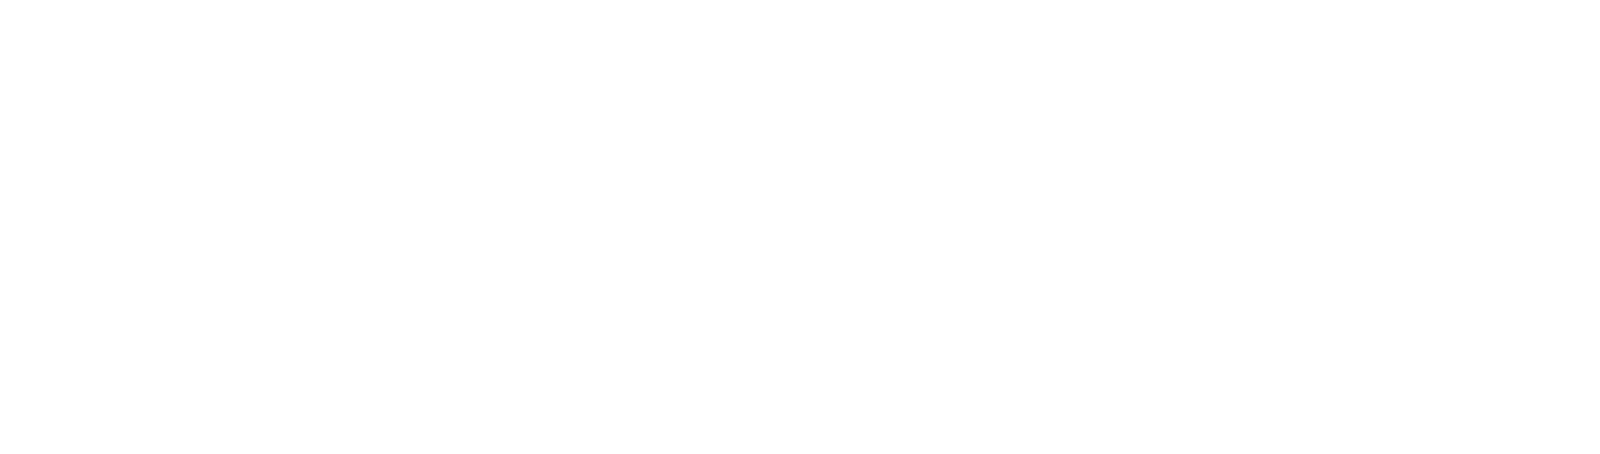 Peter Burton Music